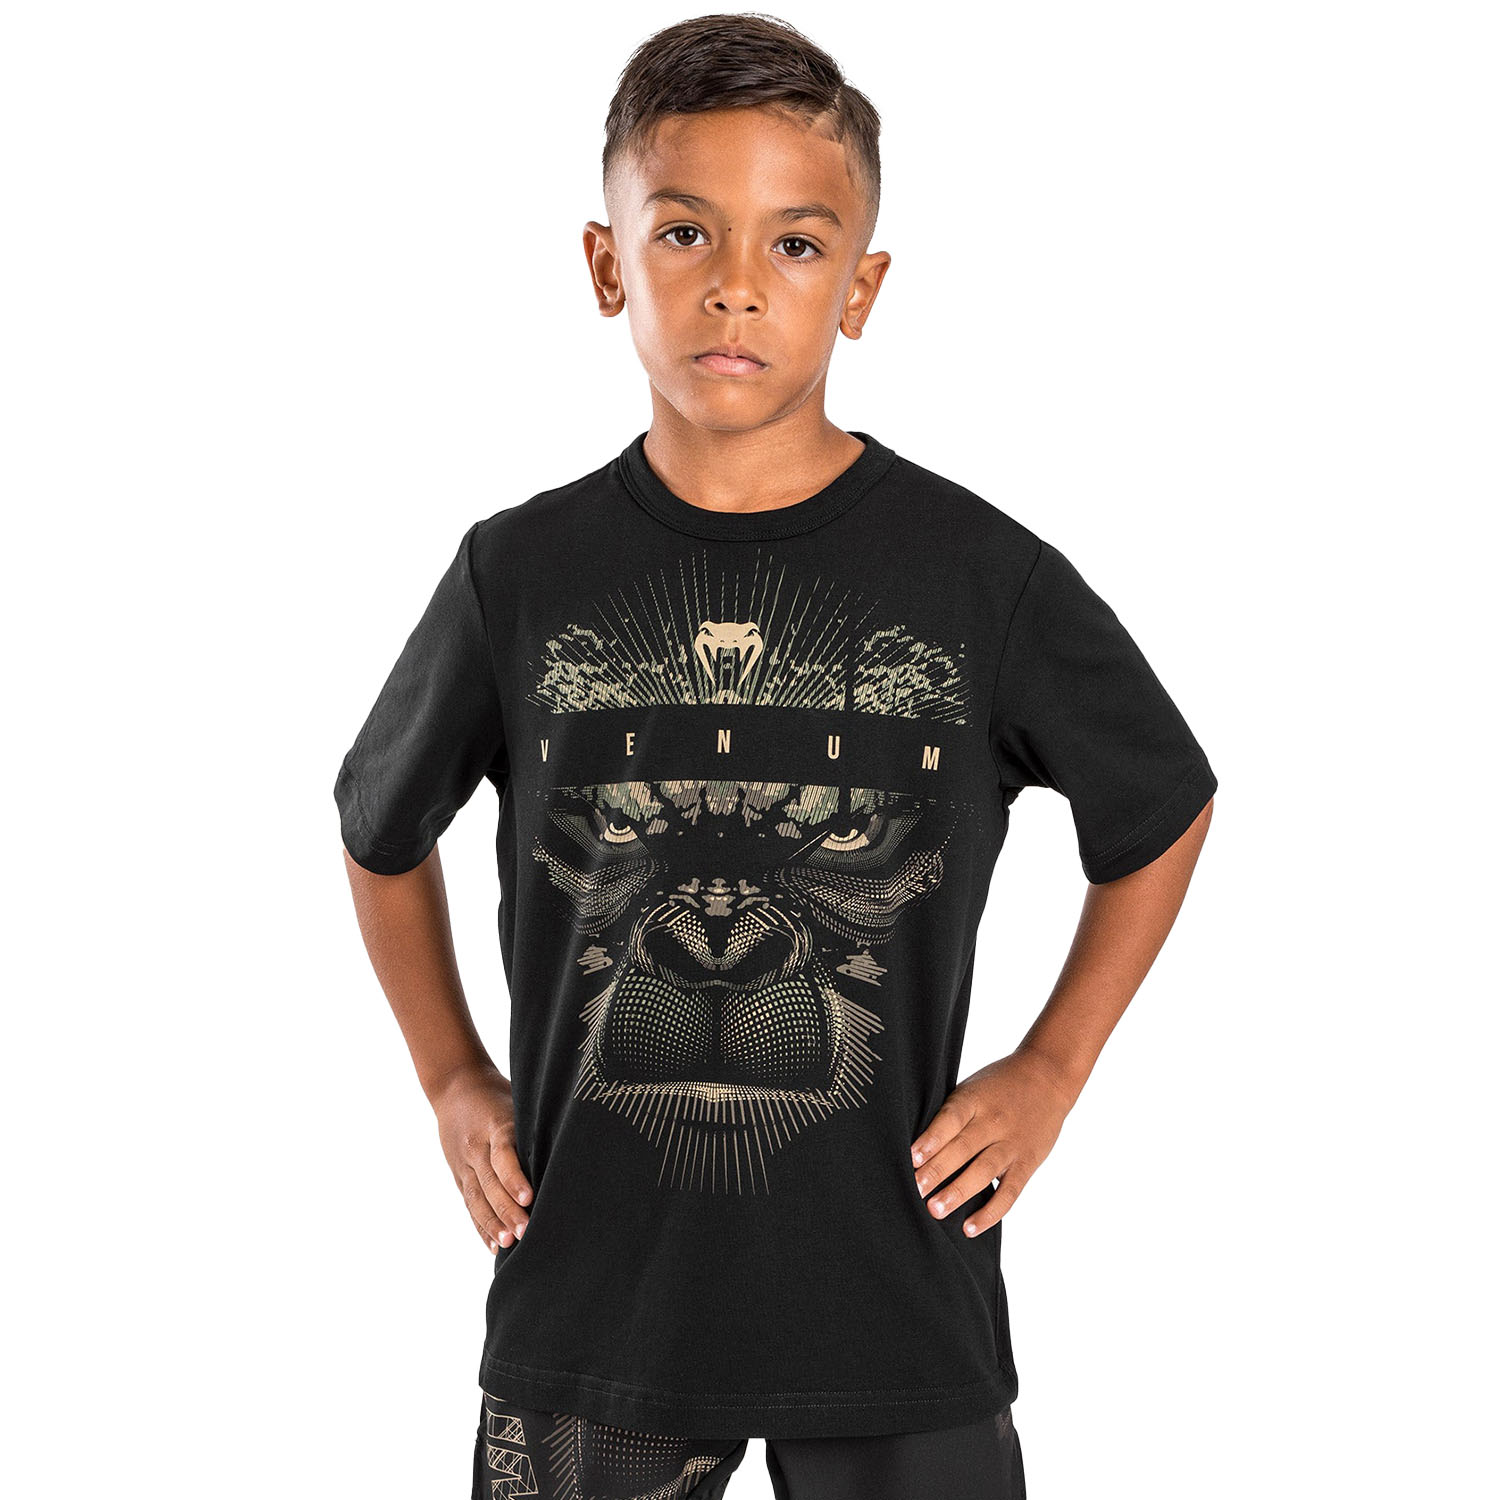 VENUM T-Shirt, Kinder Gorilla, Jungle, schwarz-sand, 12 J